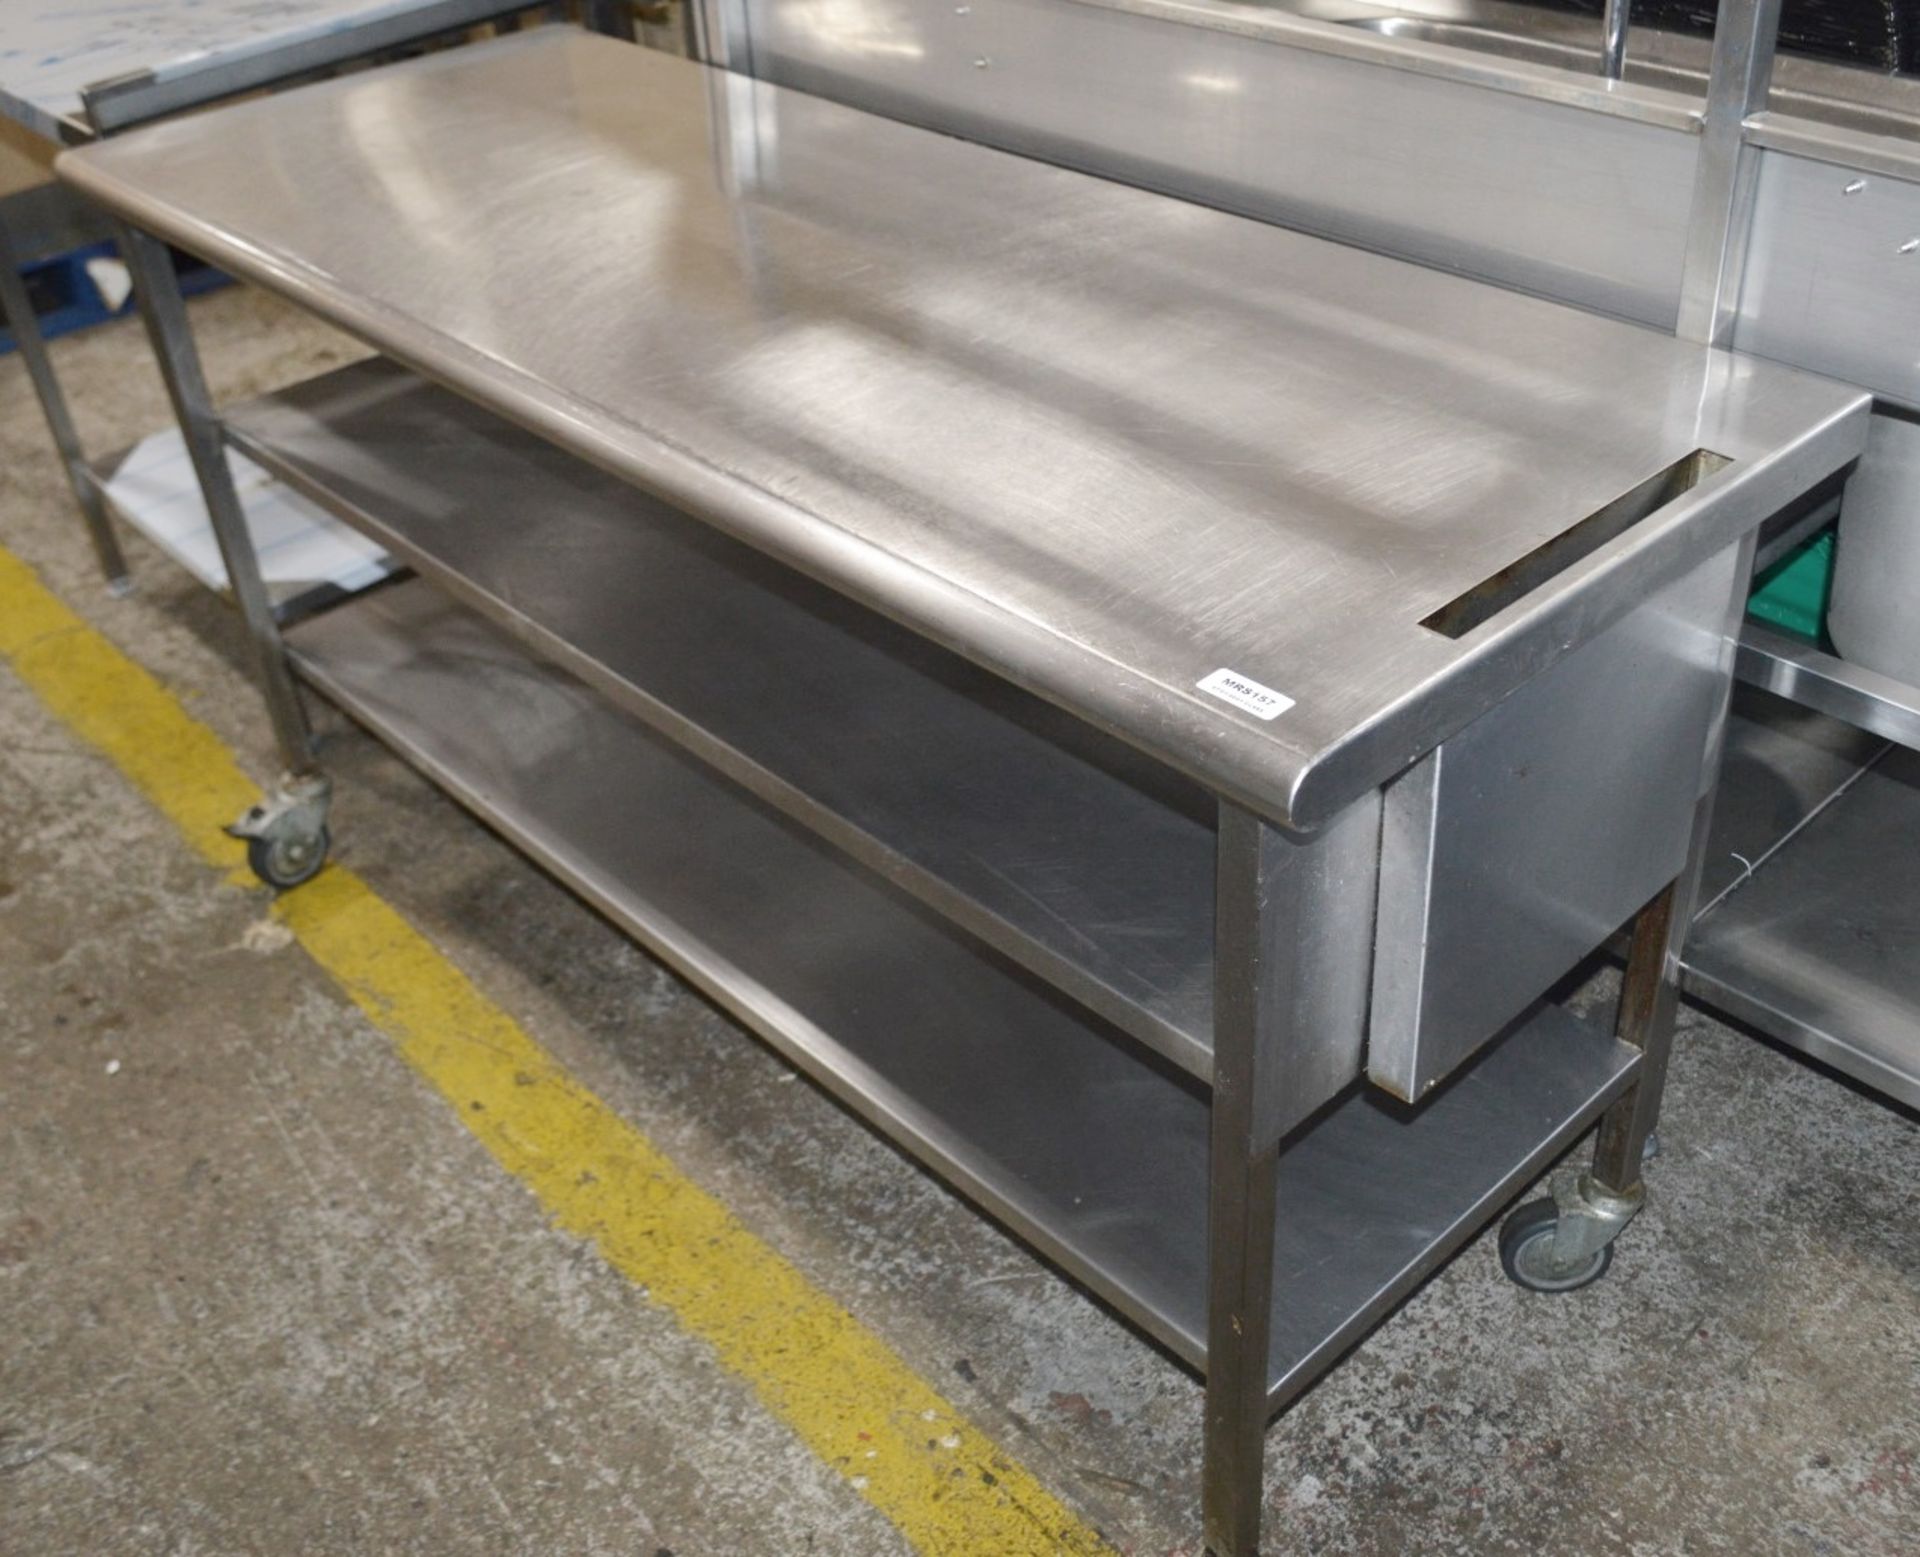 1 x Stainless Steel Commercial Kitchen Long Prep Table On Castors - Dimensions: H89 x W160 x D60cm -